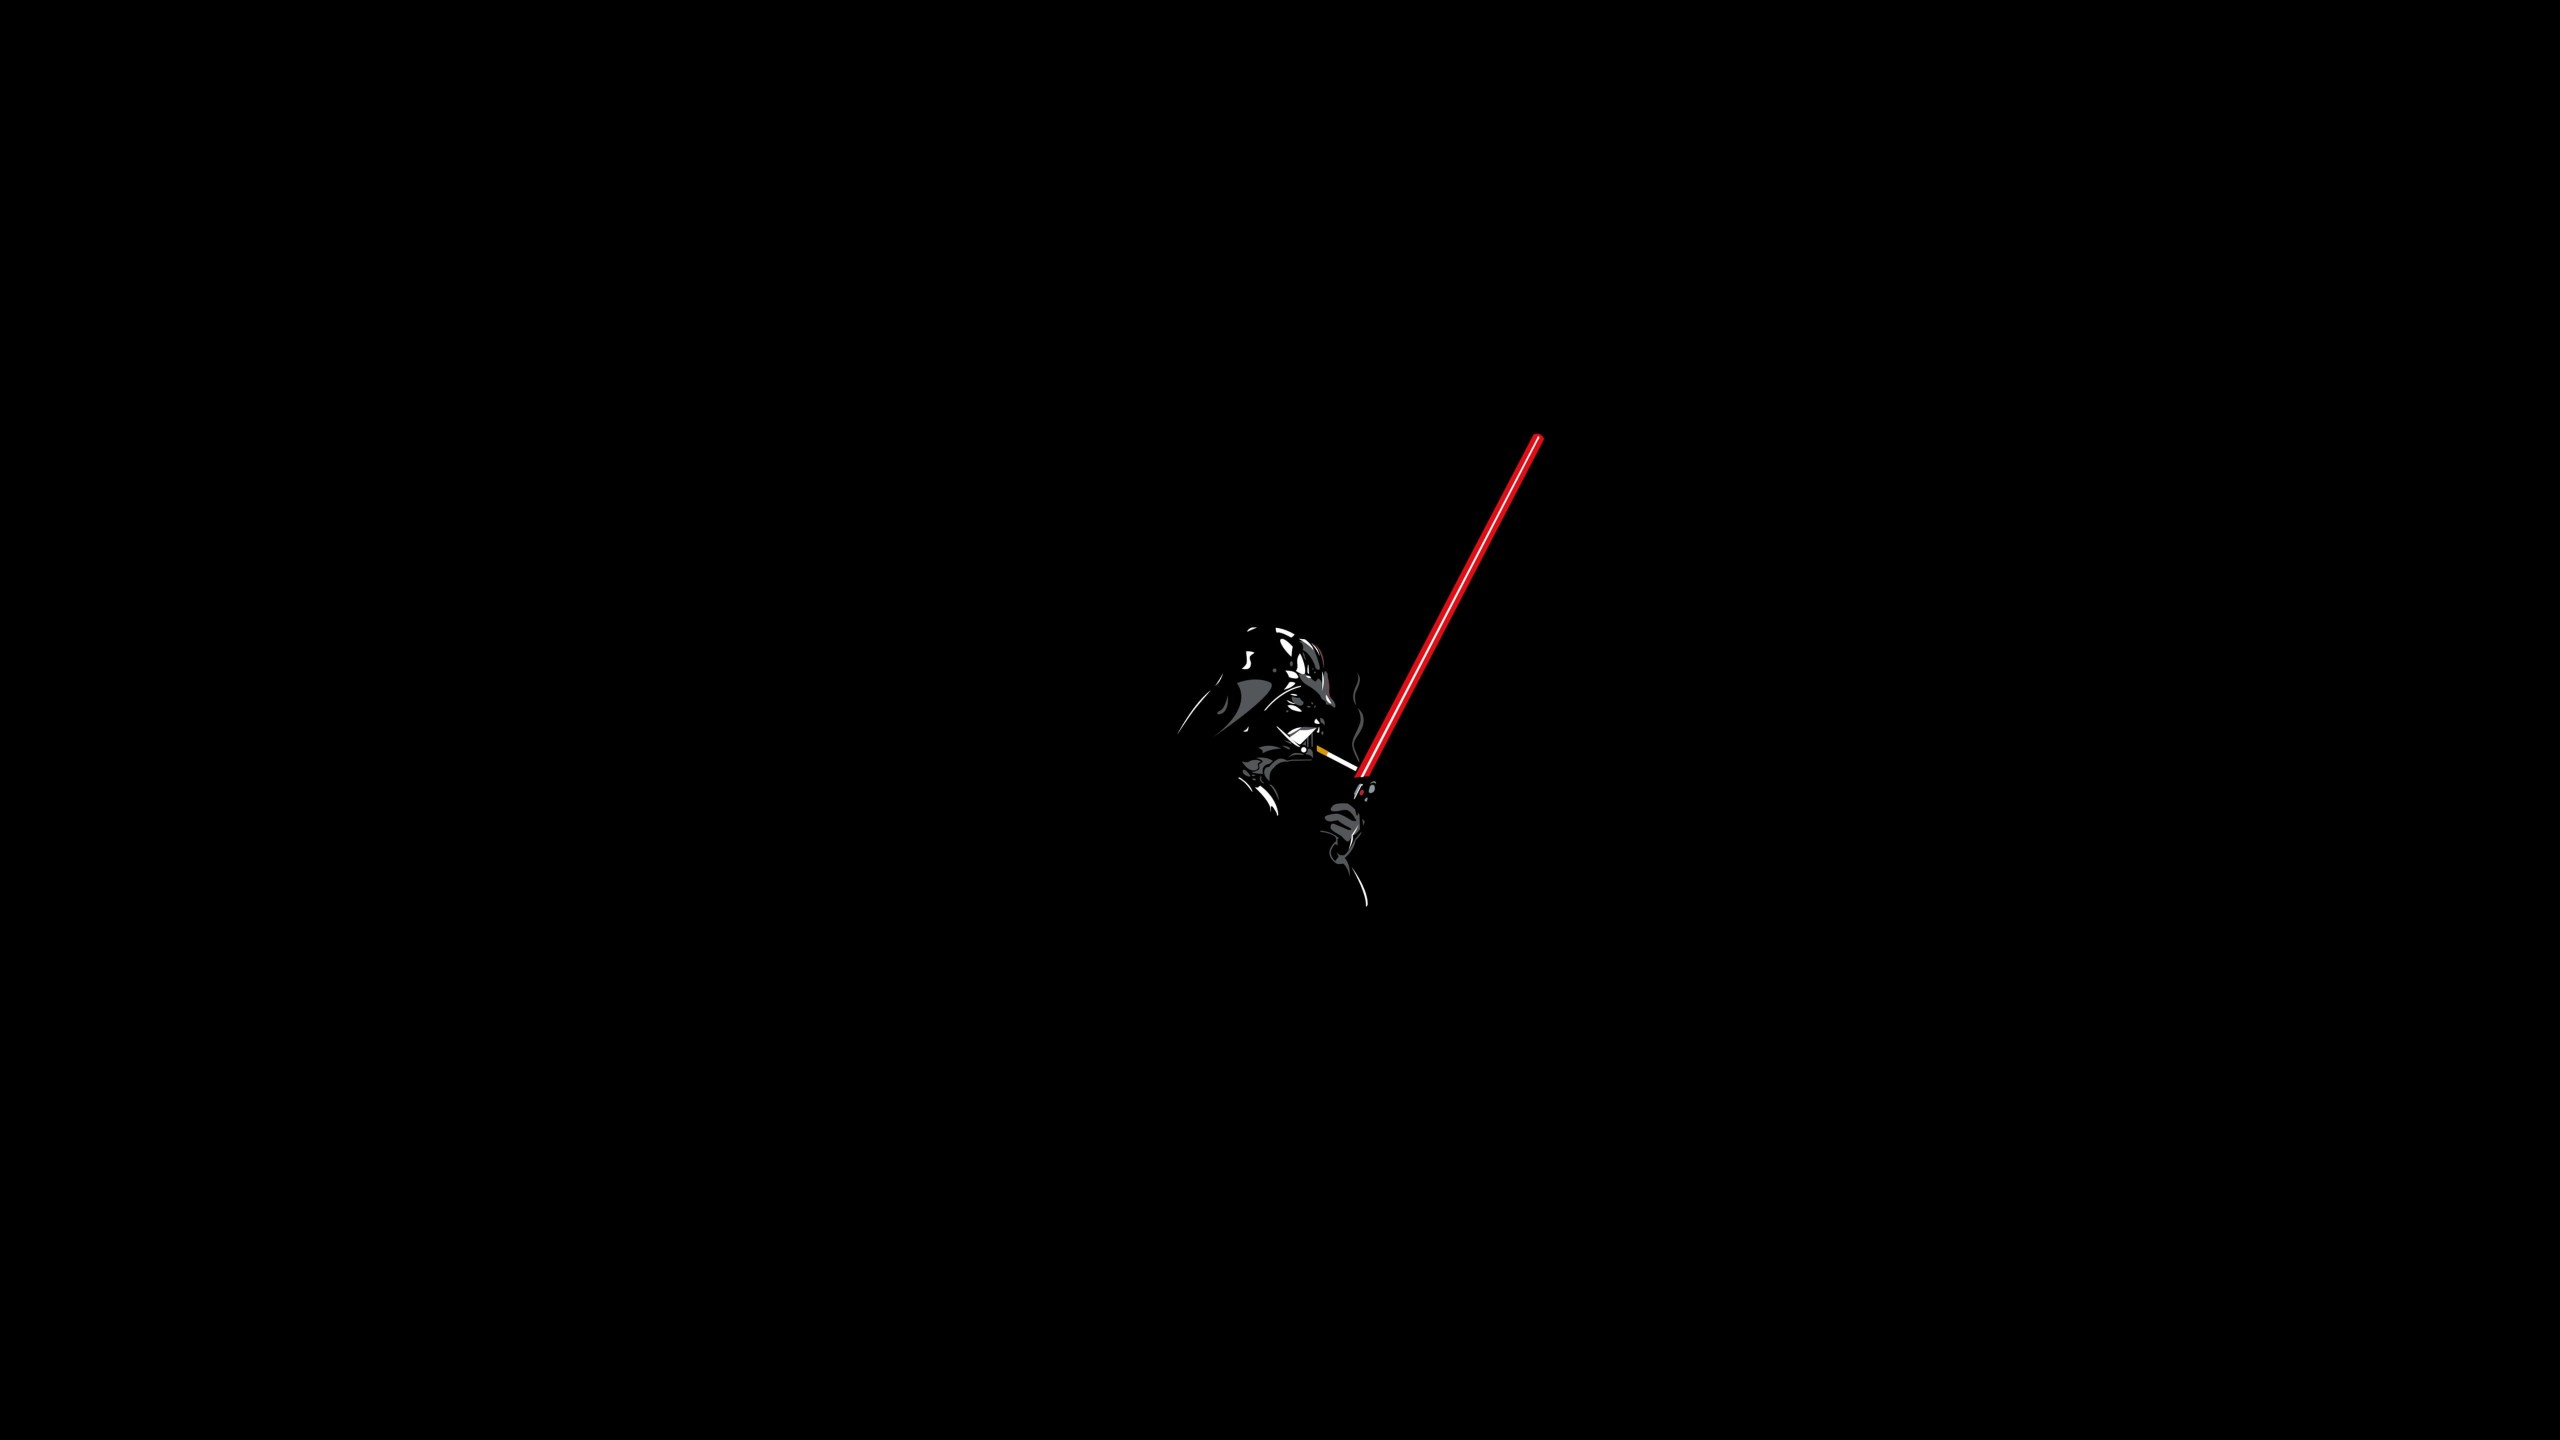 Darth Vader Lighting a Cigarette Wallpaper for Desktop 2560x1440